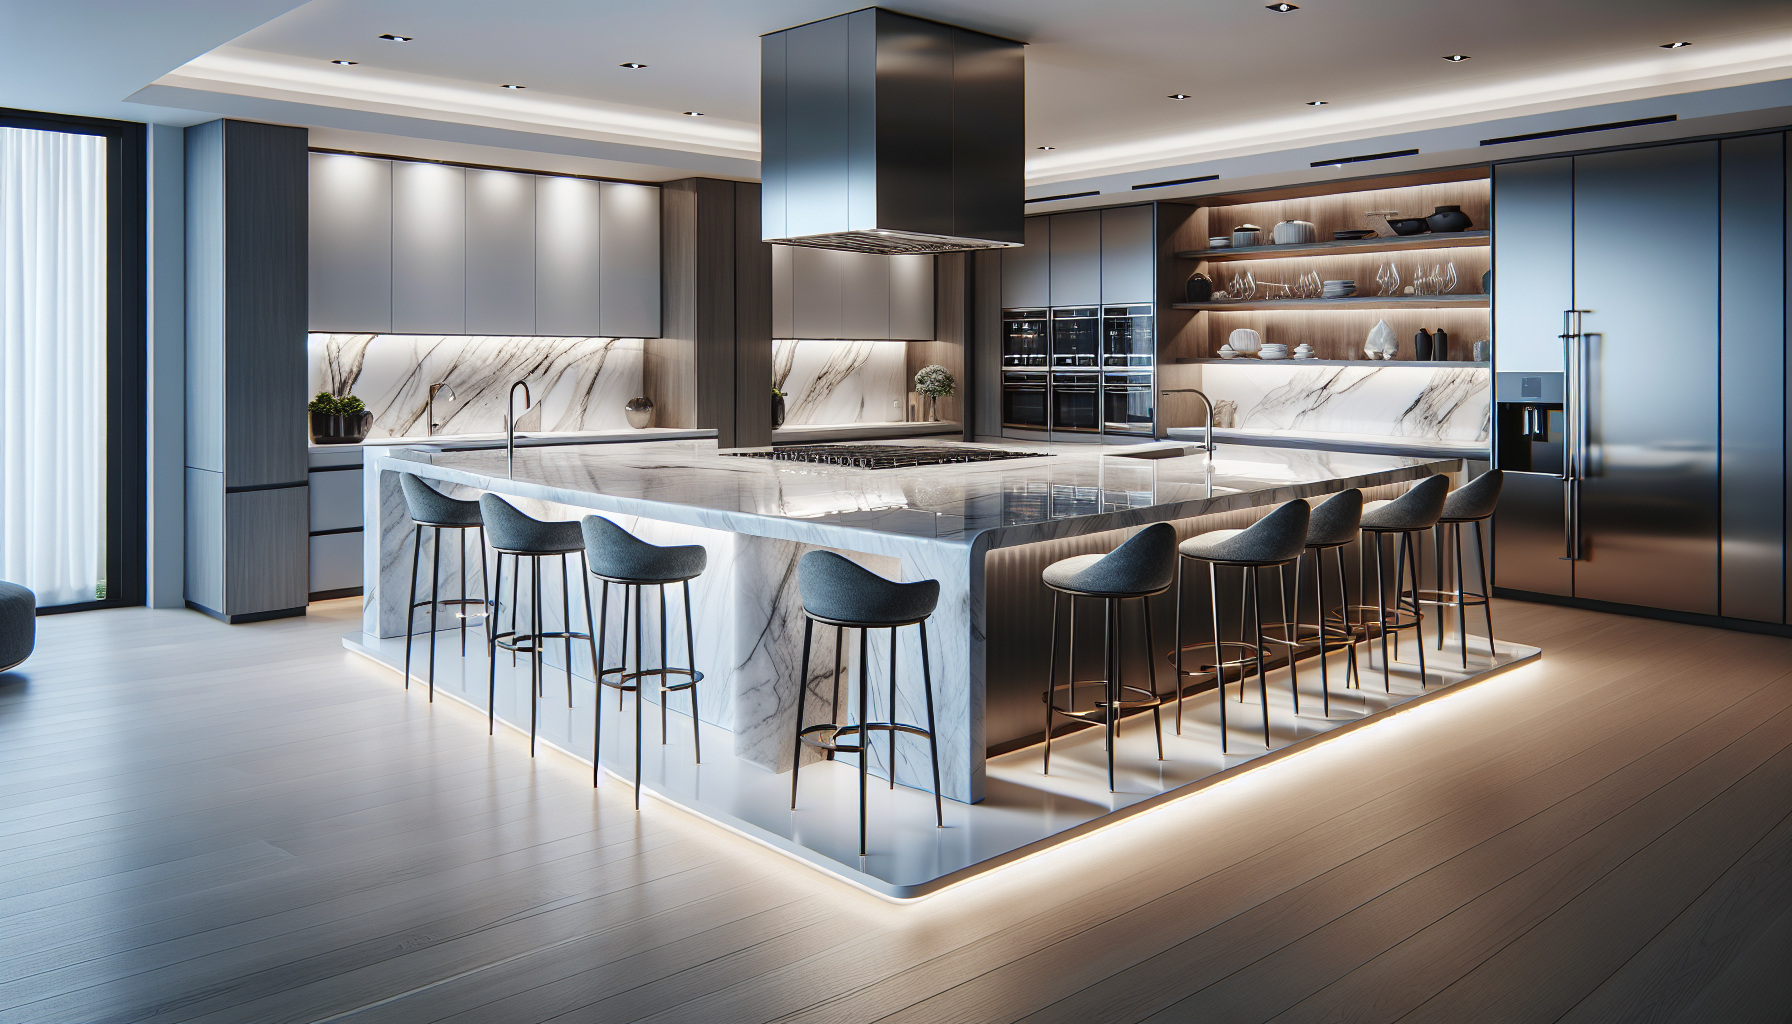 Functional and visually striking customized kitchen island in luxury modern kitchen design